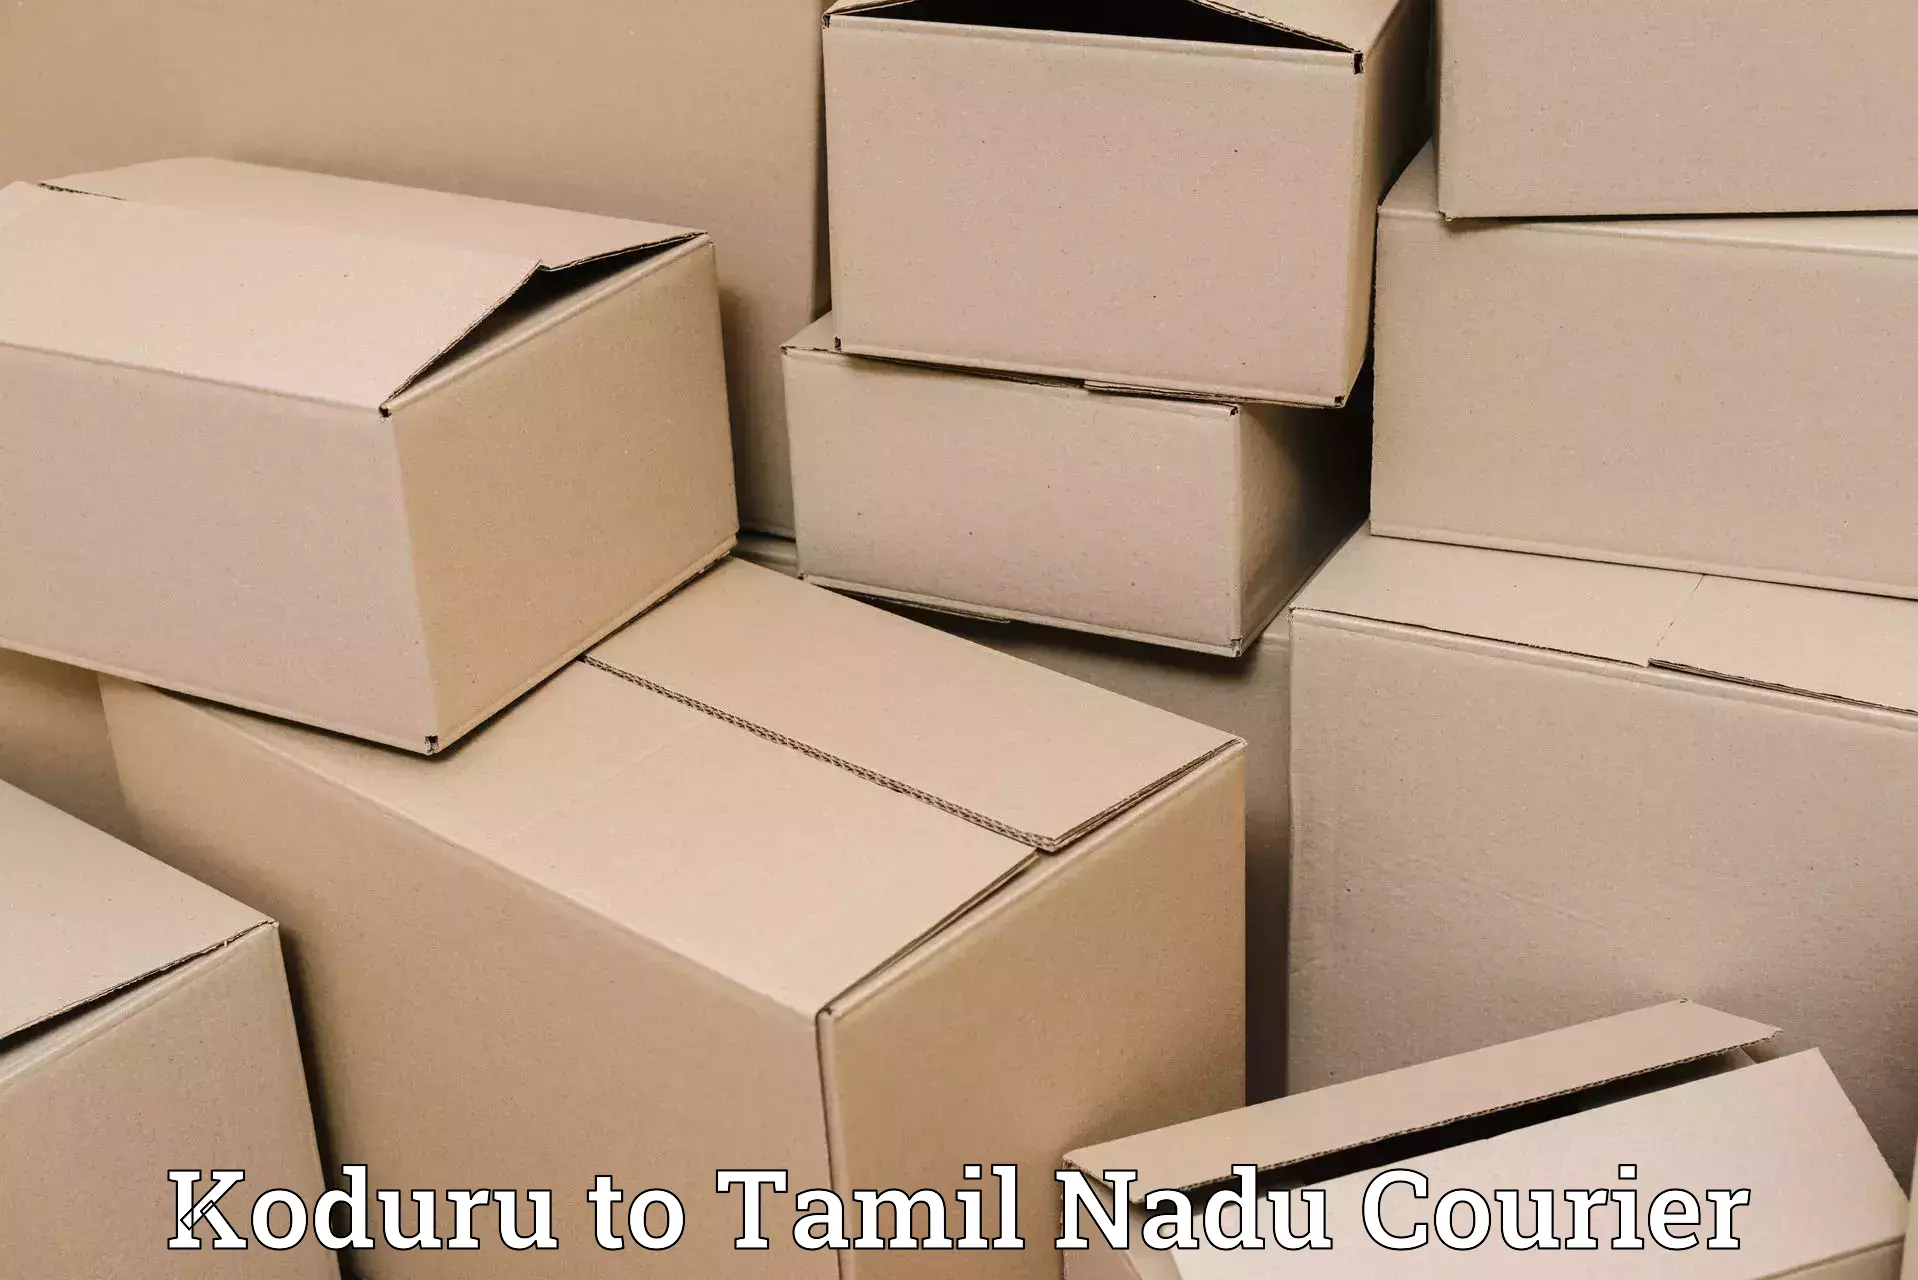 24-hour courier service in Koduru to Chennai Port